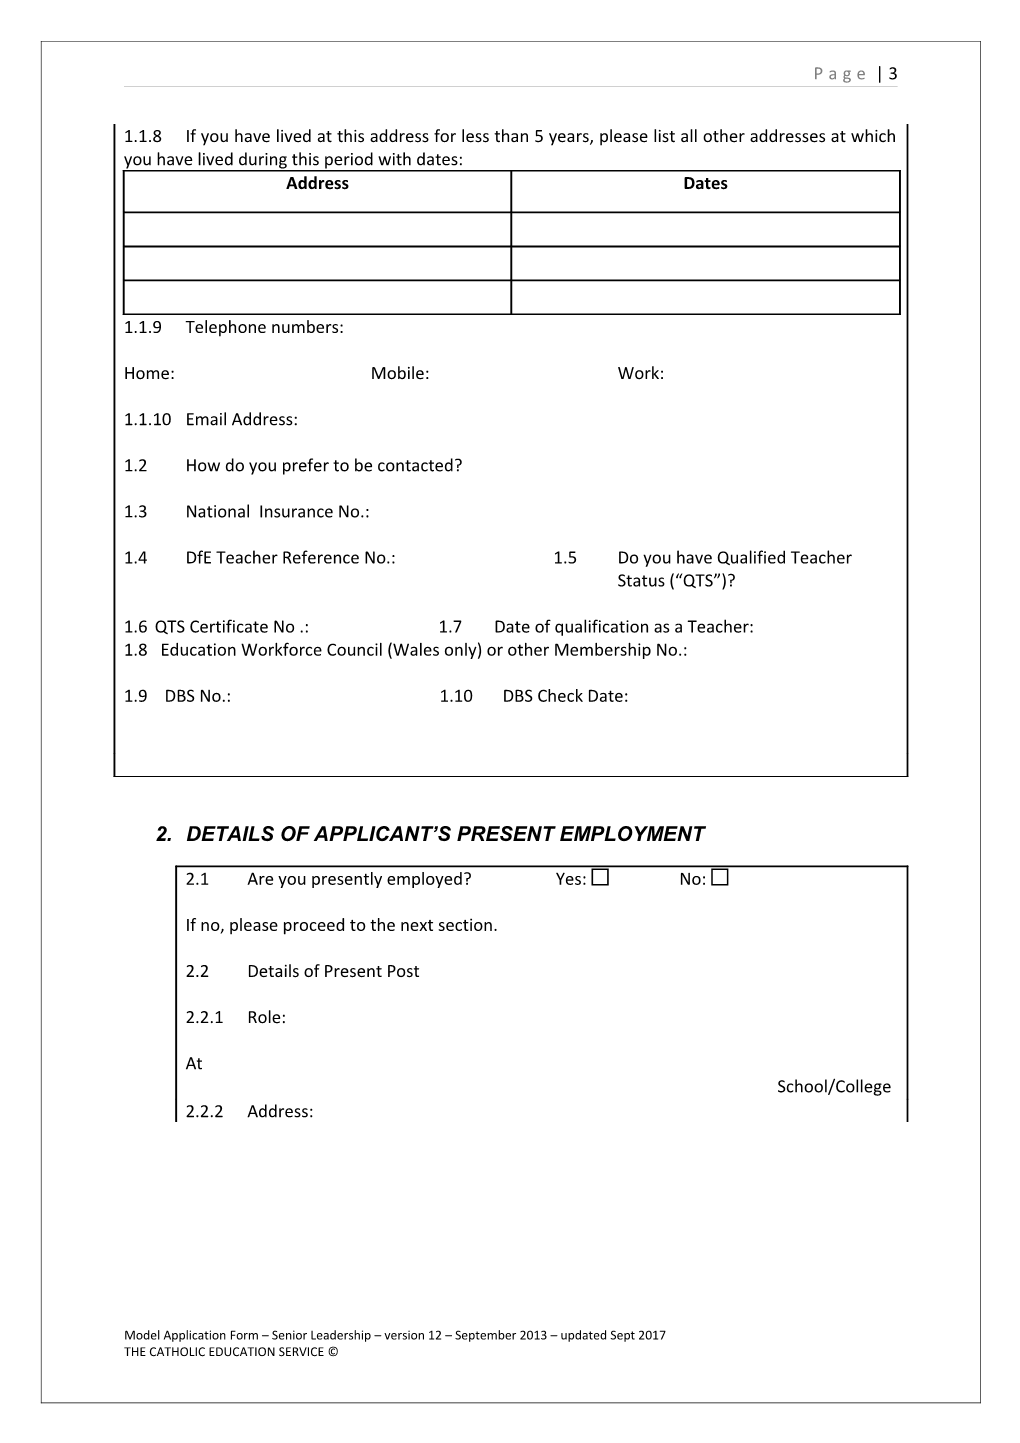 Senior Leadership Application Form